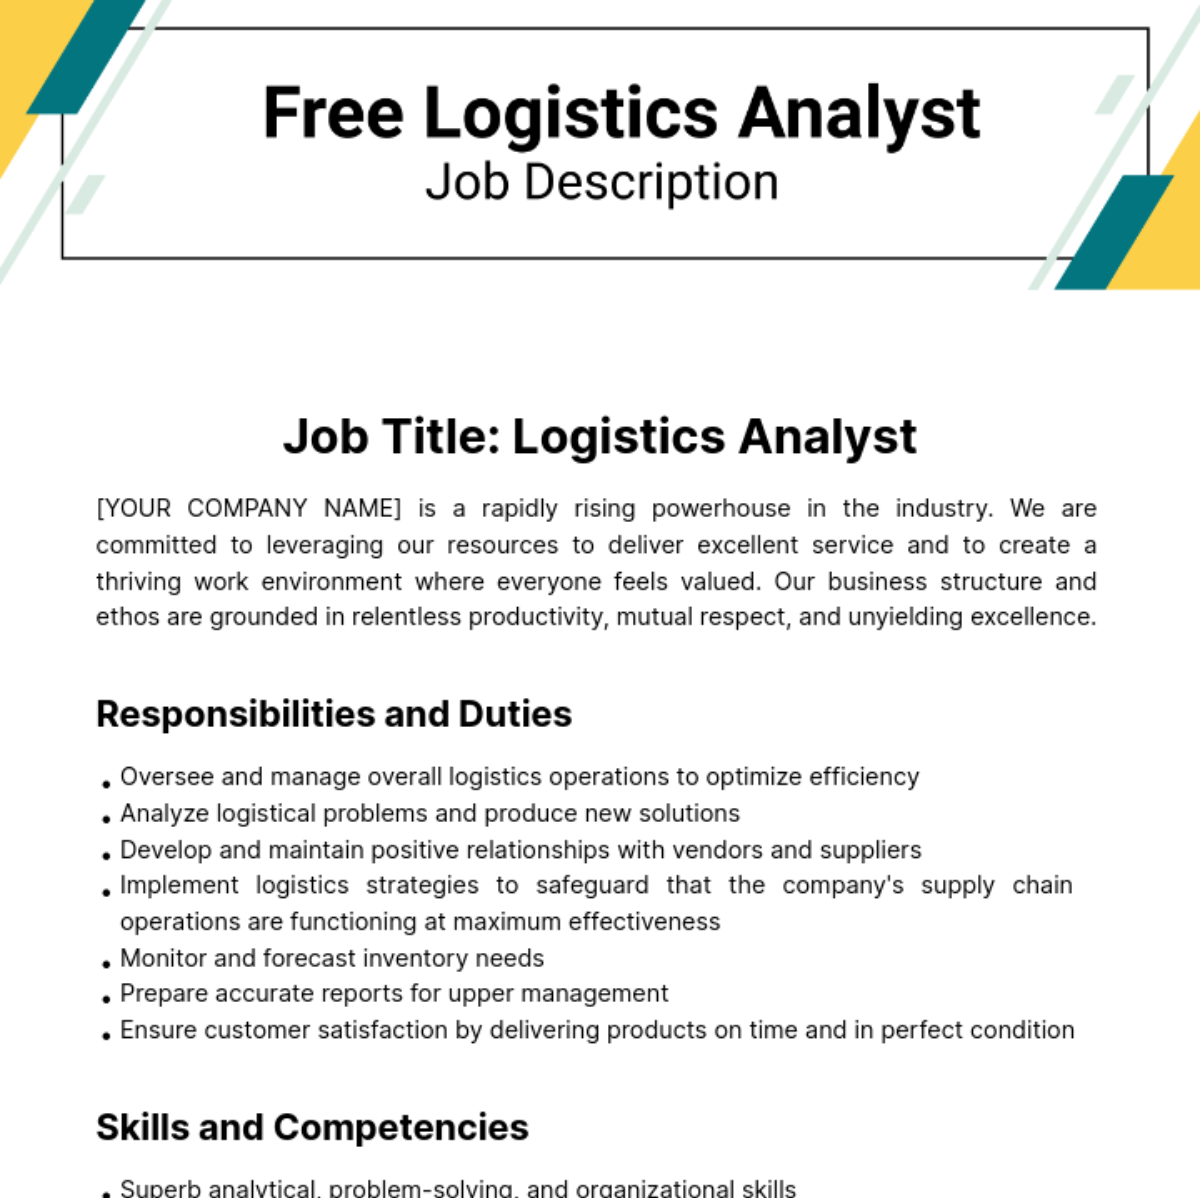 Free Logistics Analyst Job Description Template